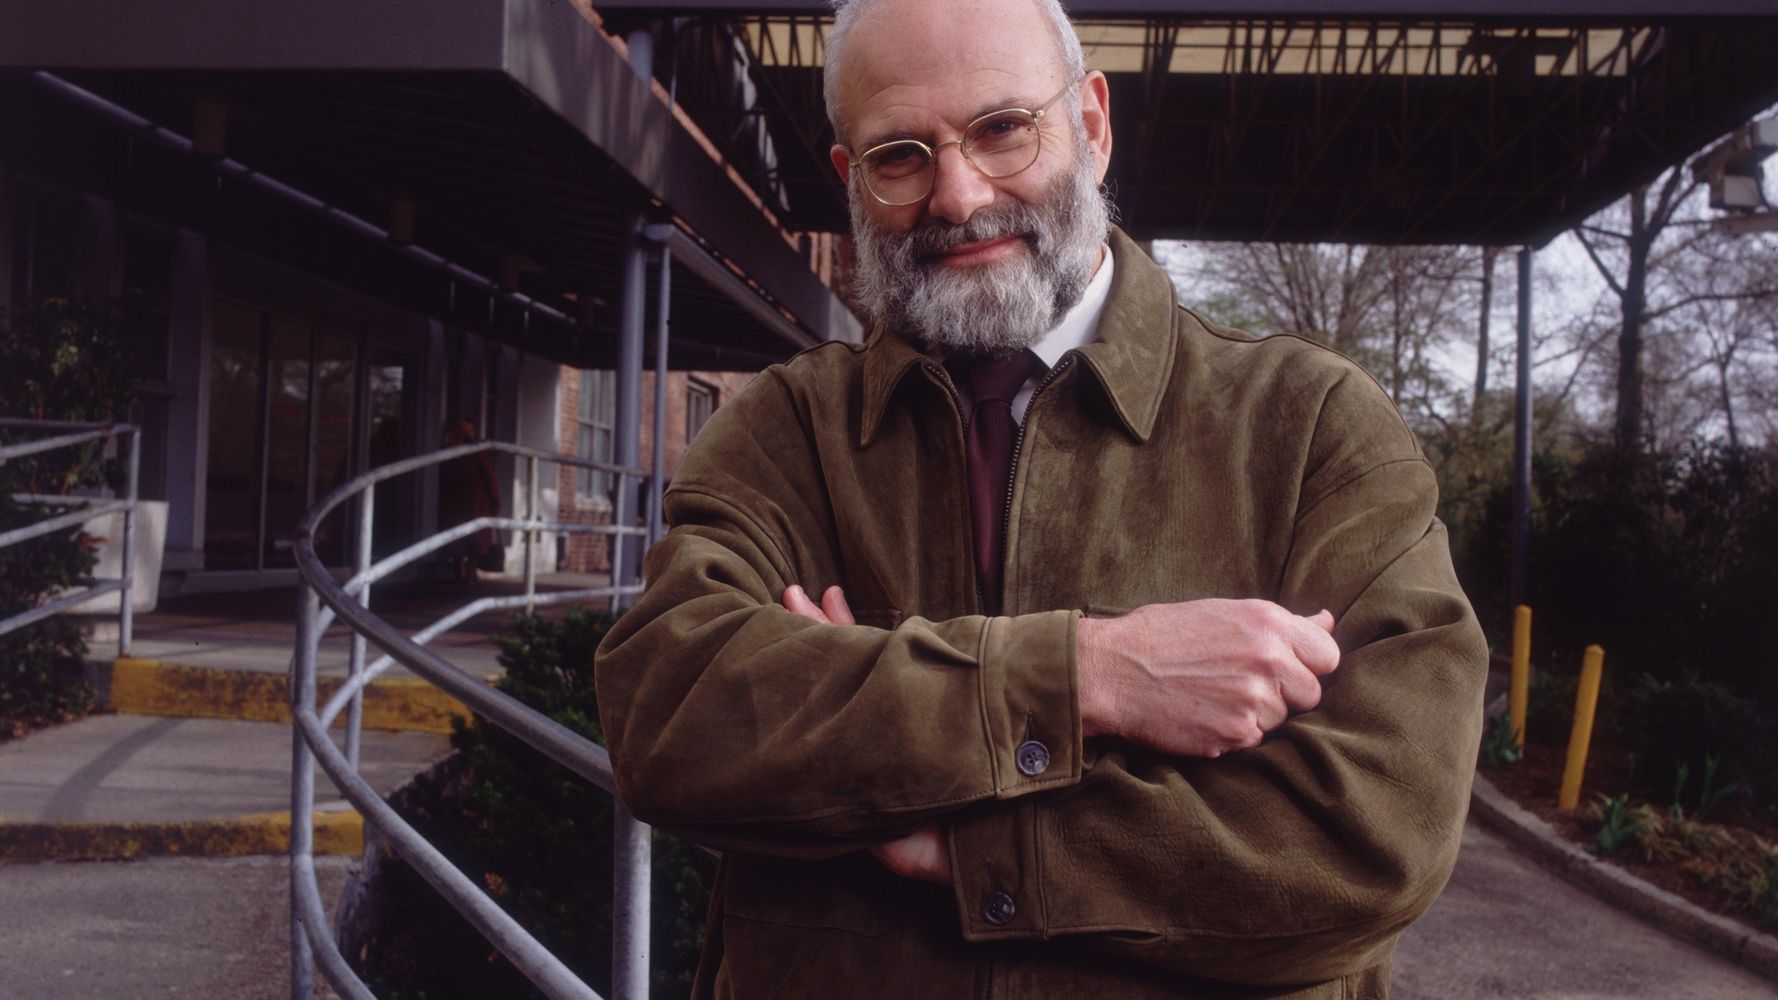 Neurologist, author Oliver Sacks dies at 82 - National